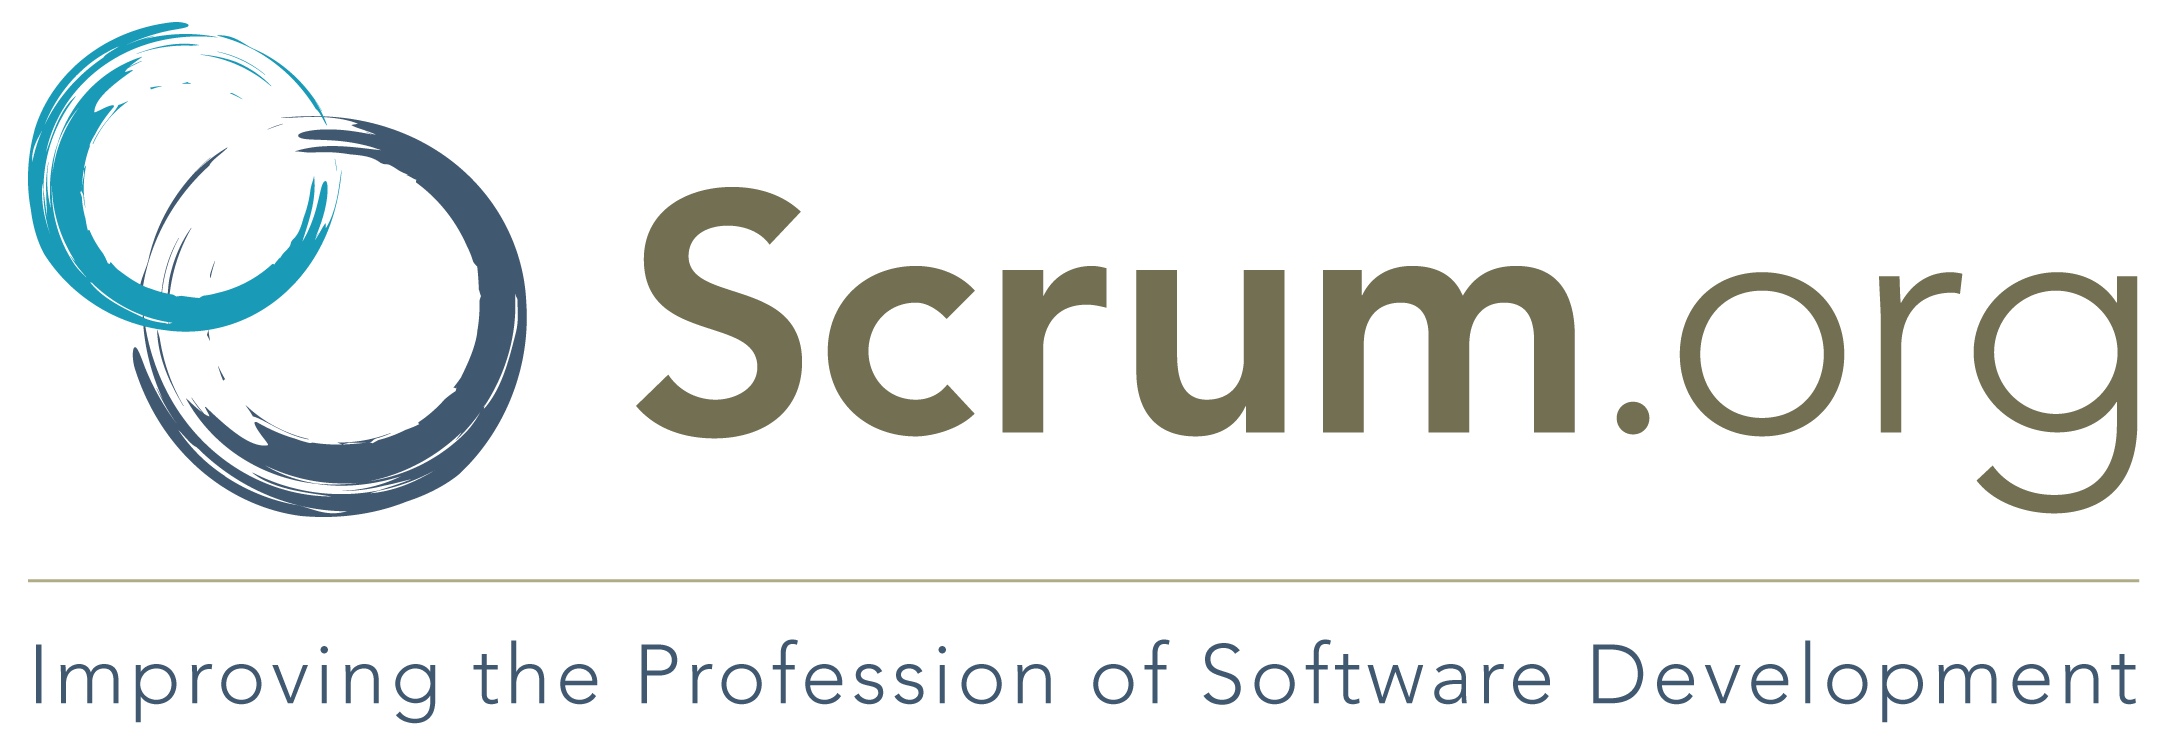 Scrum Logo - Scrum Org Logo Data Systems